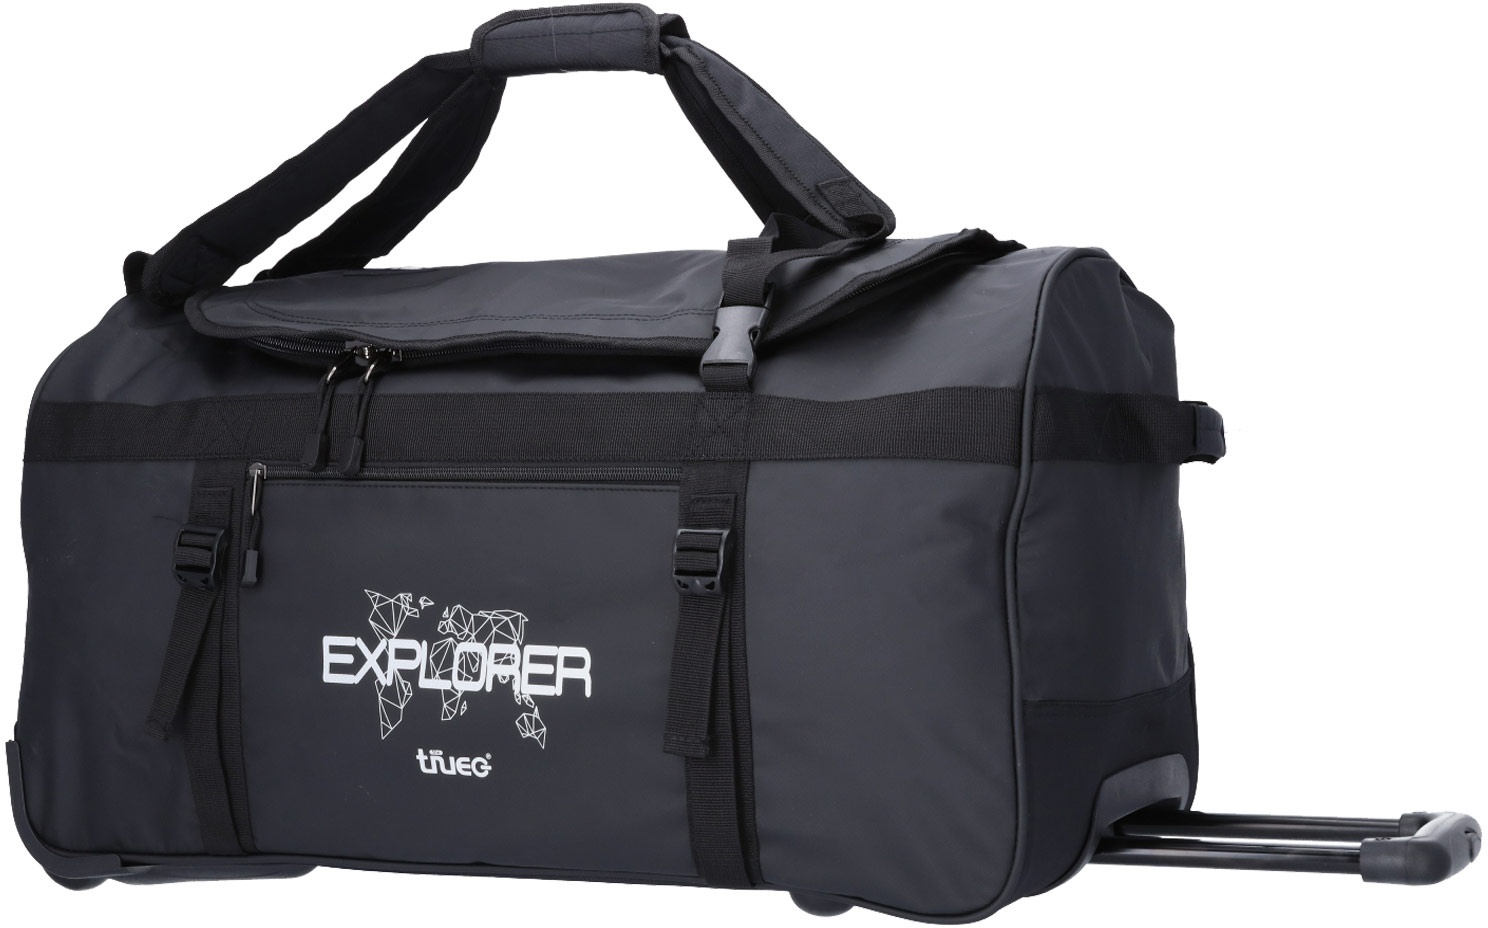 TheTrueC Trolly Bag With Wheels 66cm Explore Explorer schwarz